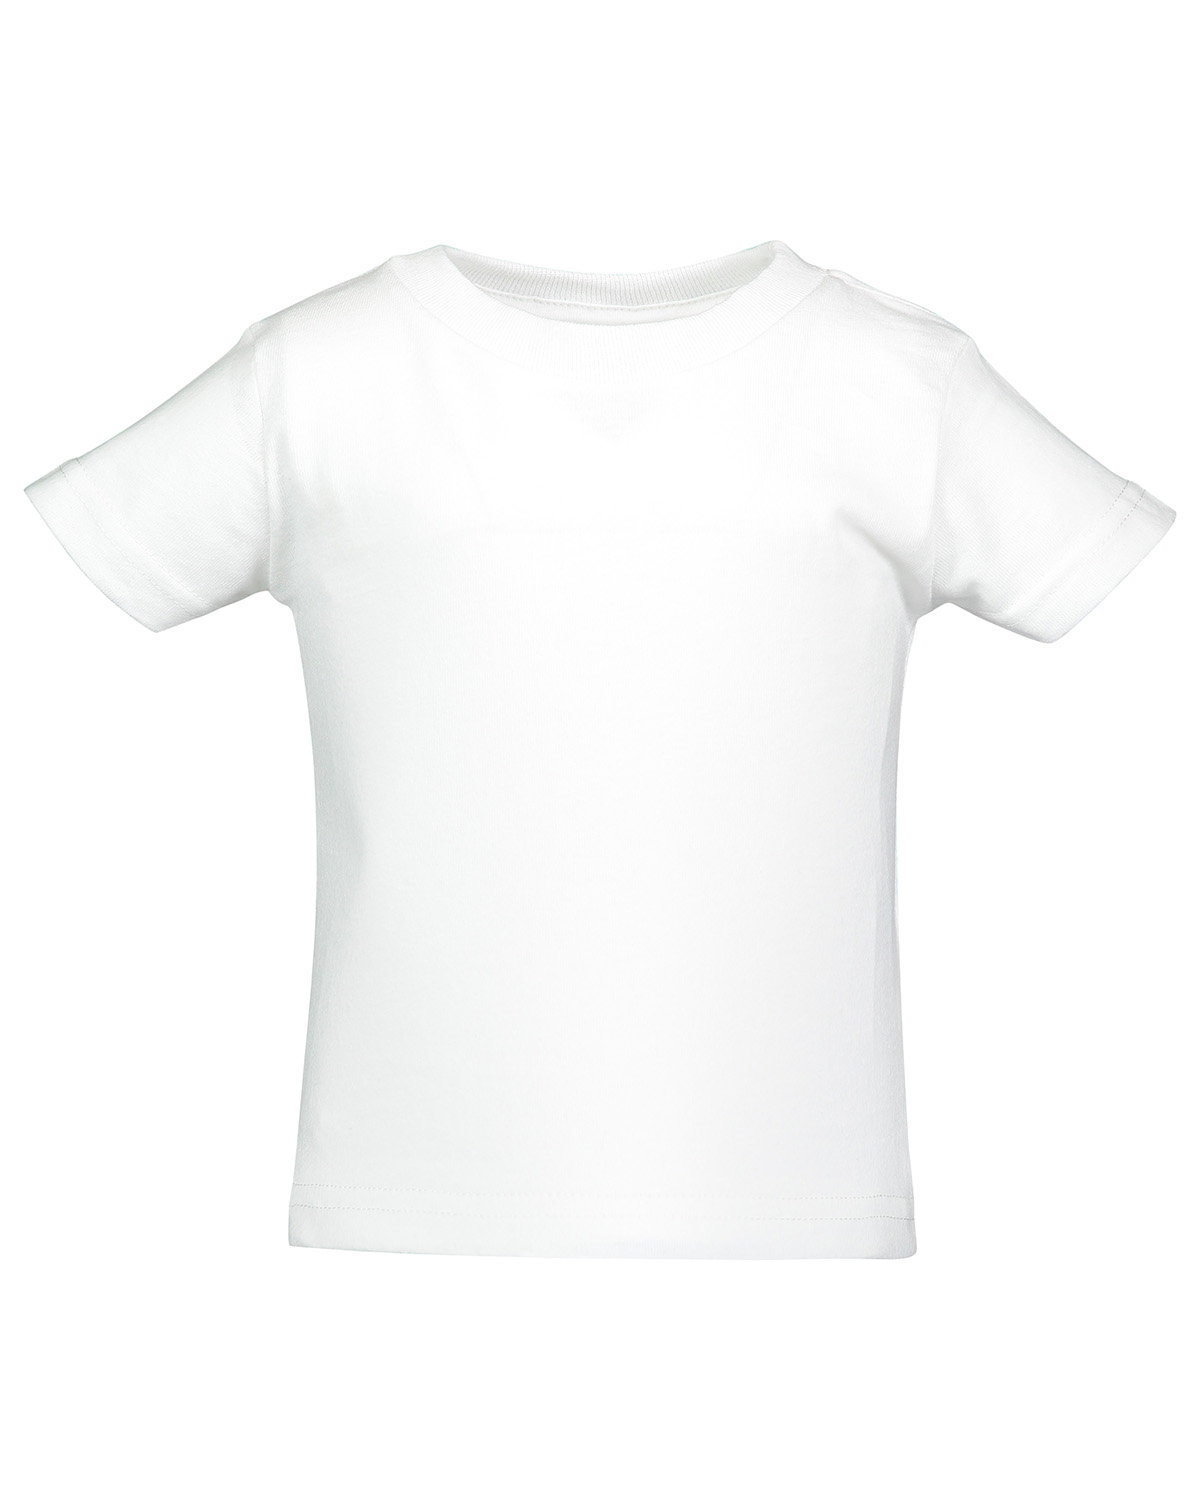 Rabbit Skins Infant Cotton Jersey T-Shirt WHITE 